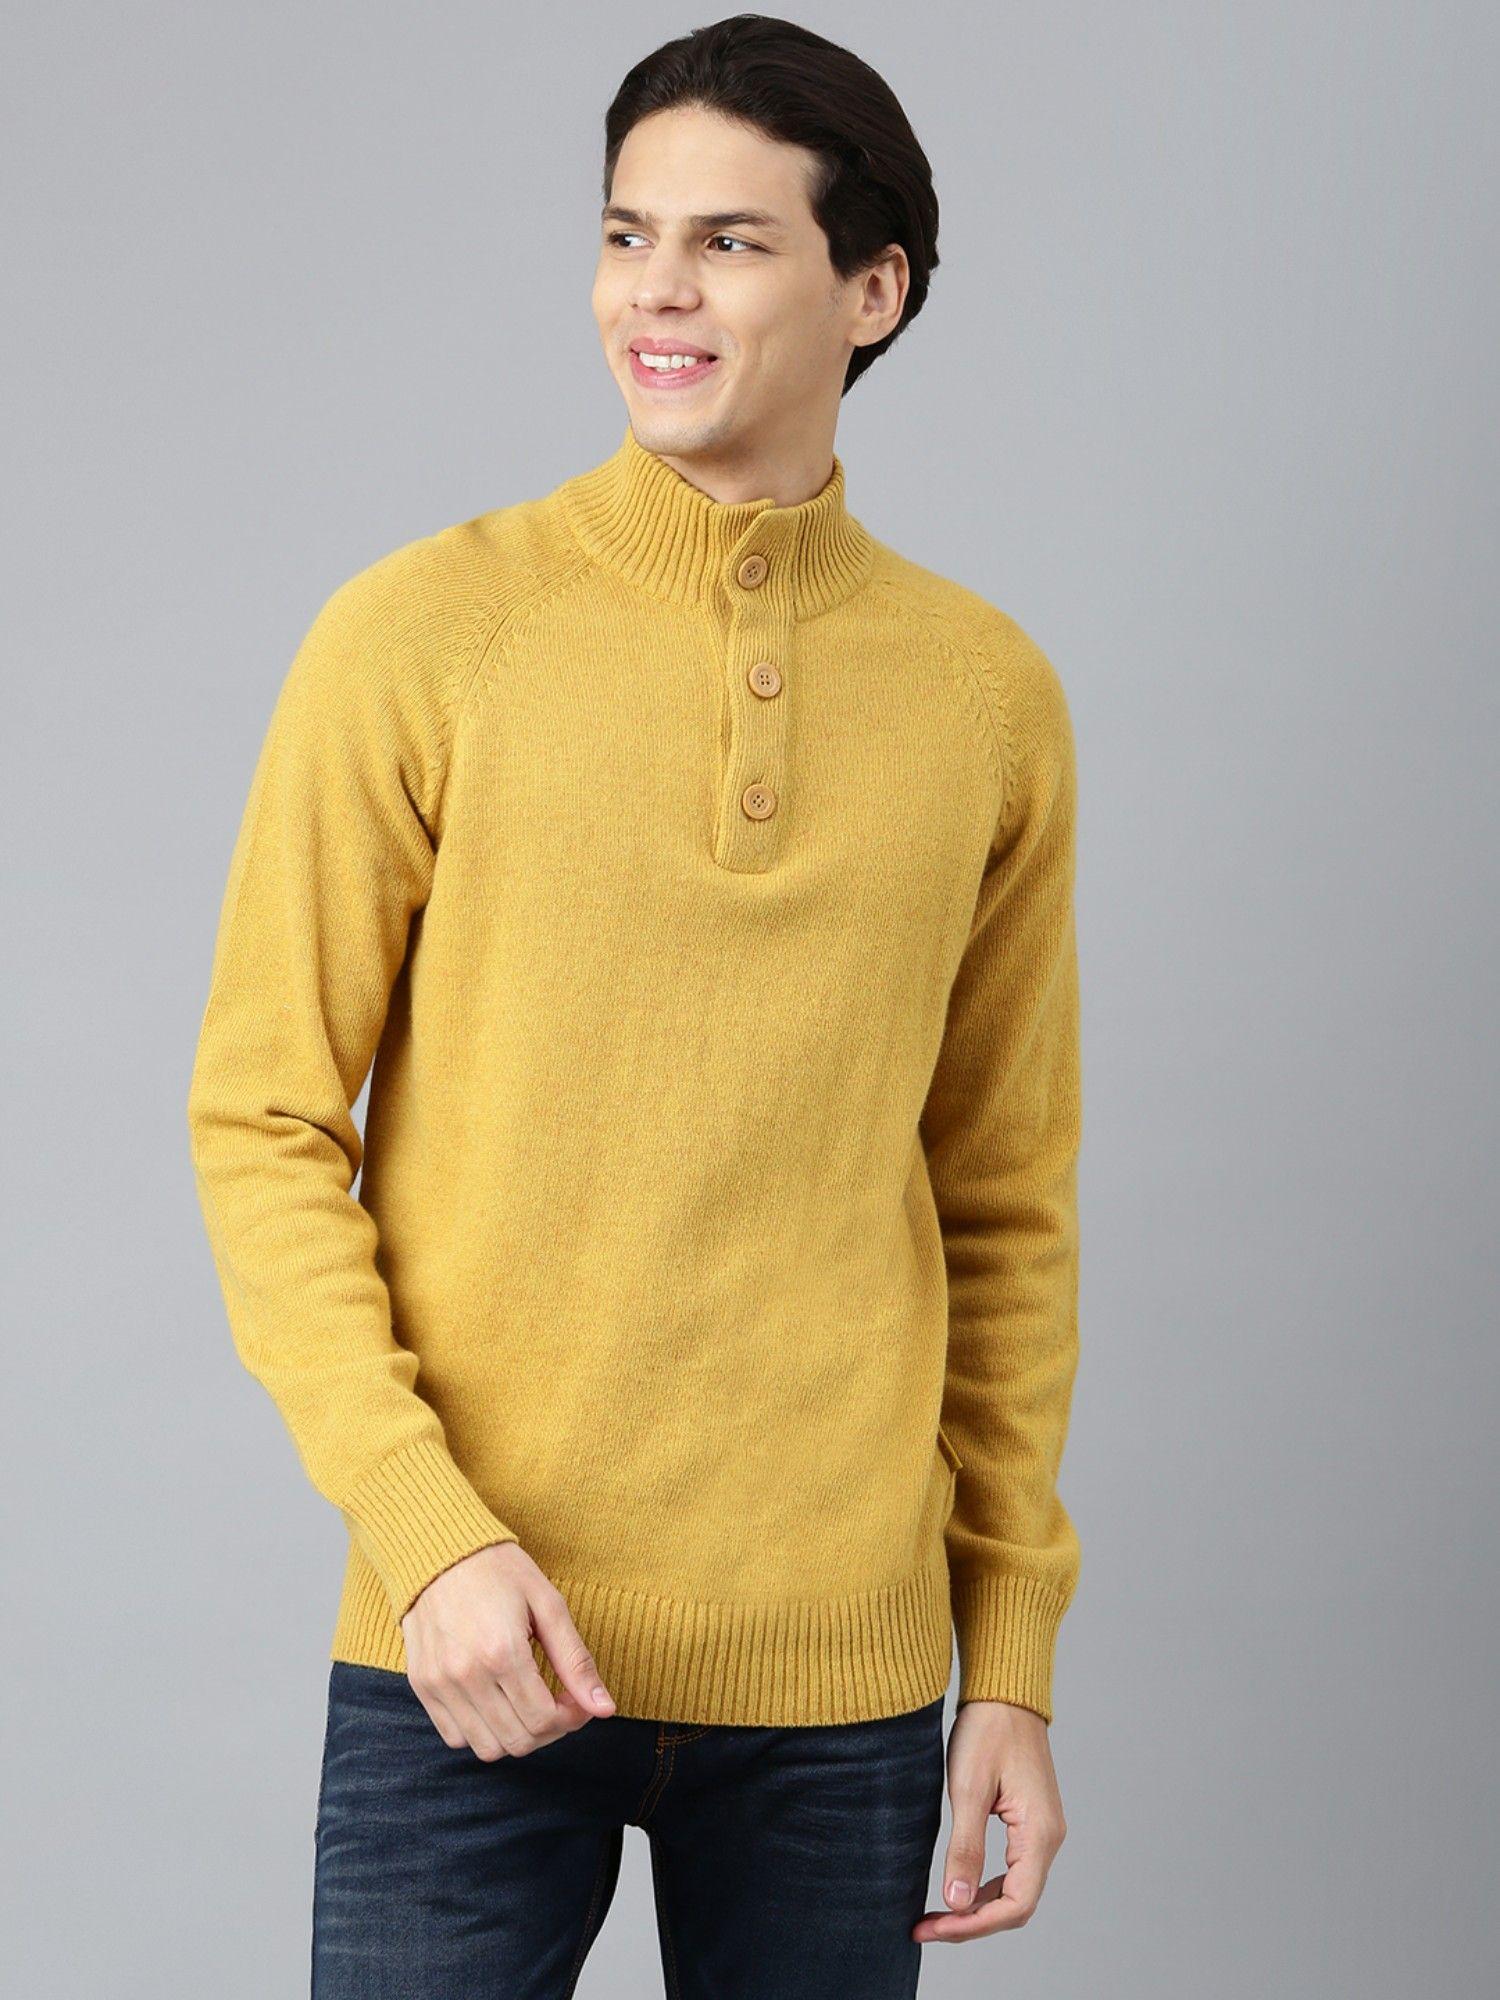 woven sweater yellow